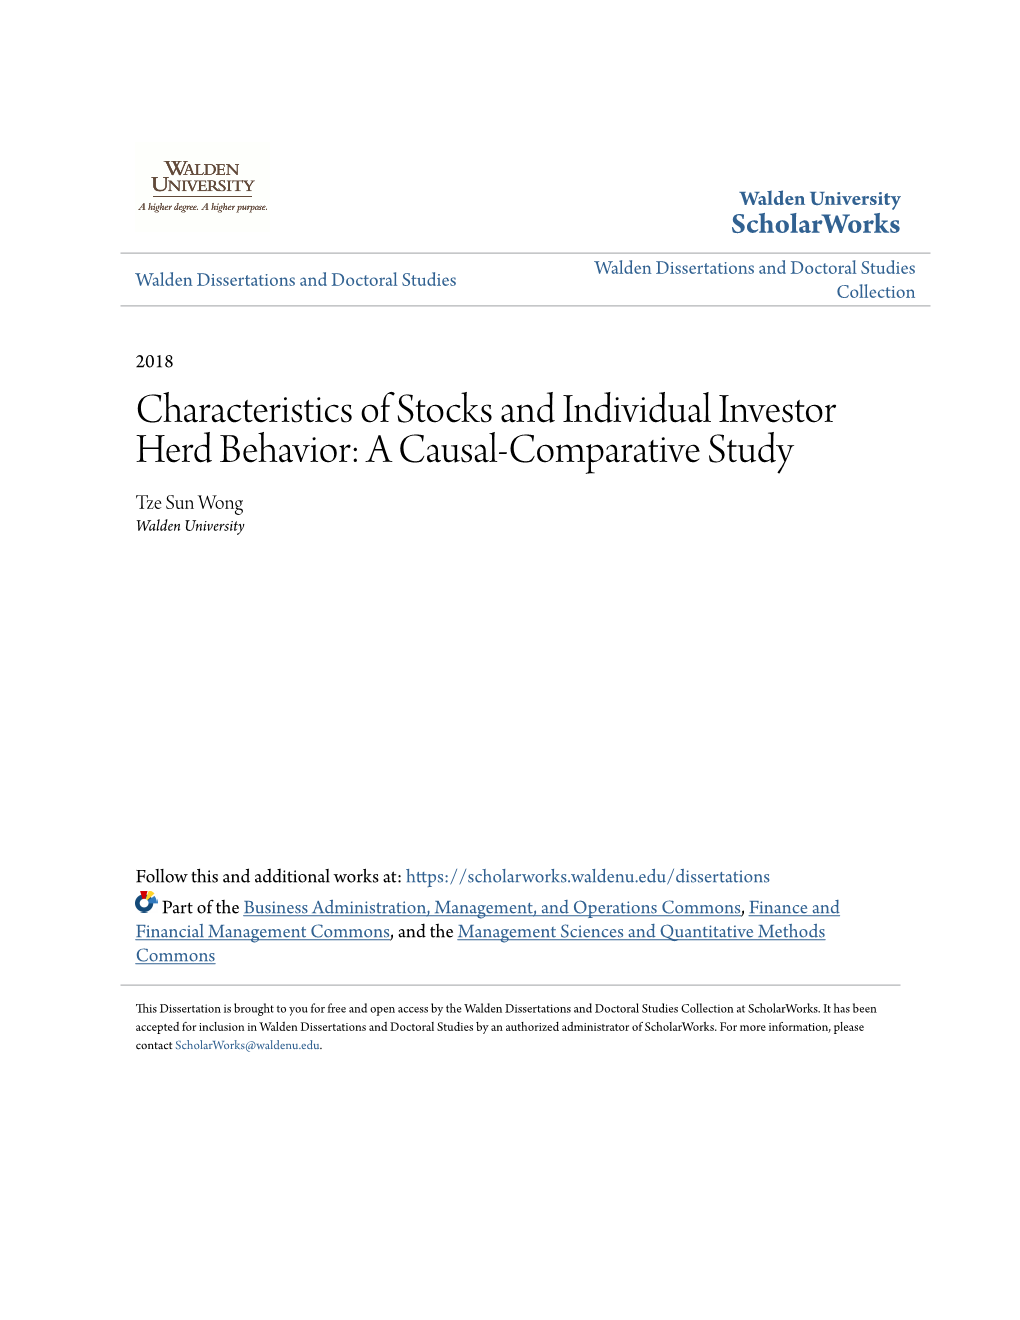 Characteristics of Stocks and Individual Investor Herd Behavior: a Causal-Comparative Study Tze Sun Wong Walden University